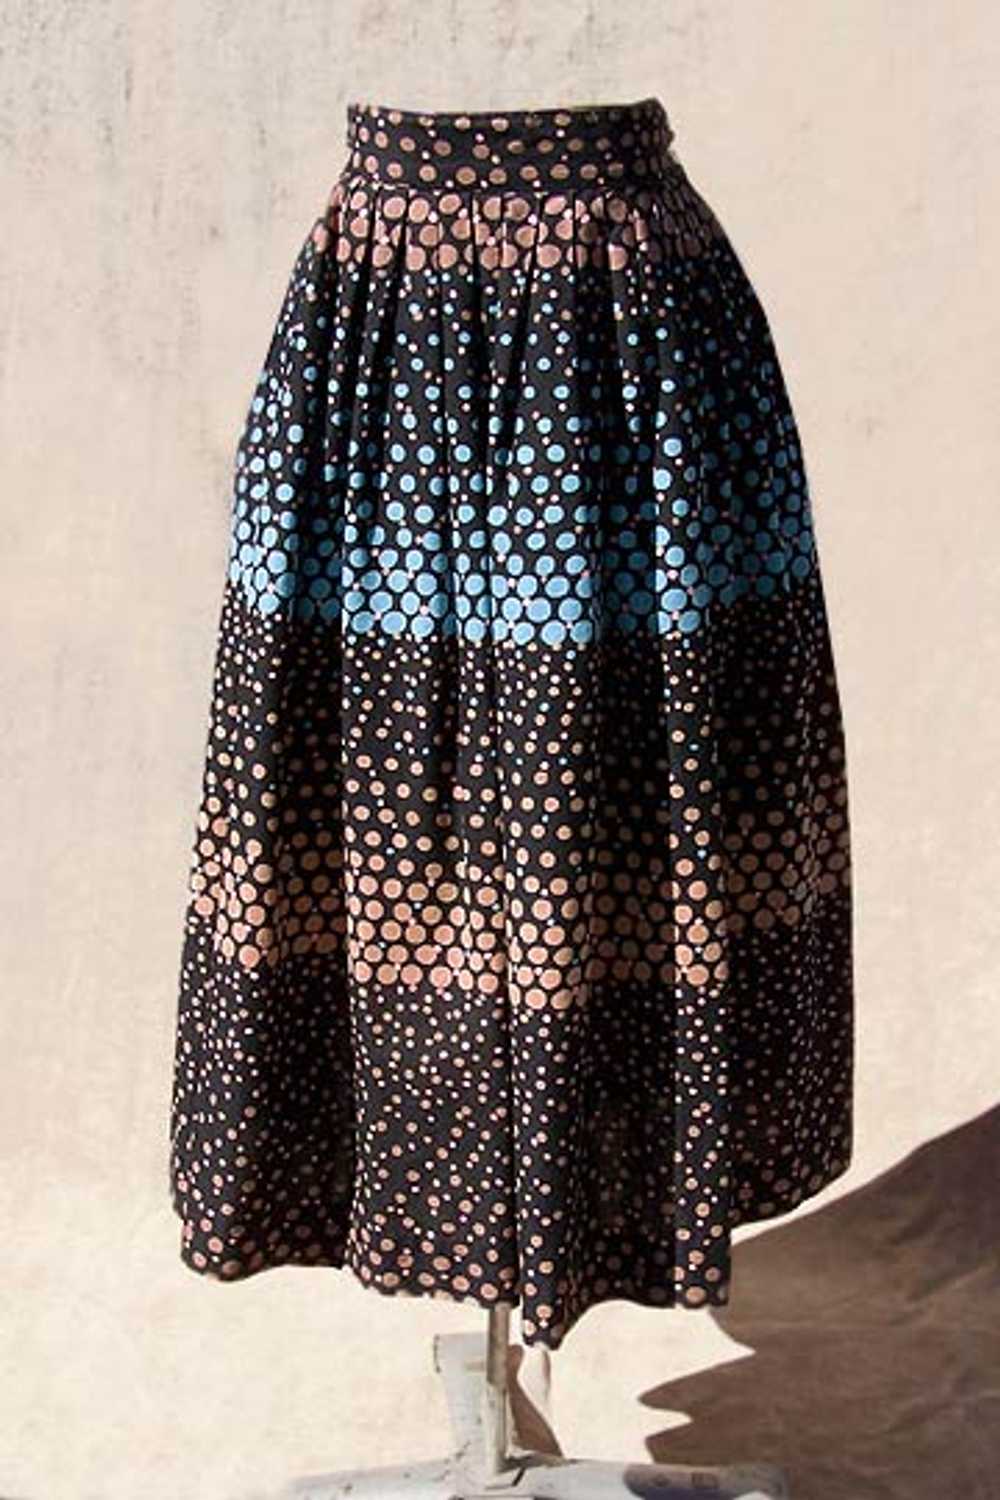 Atomic polka-dot skirt - image 7